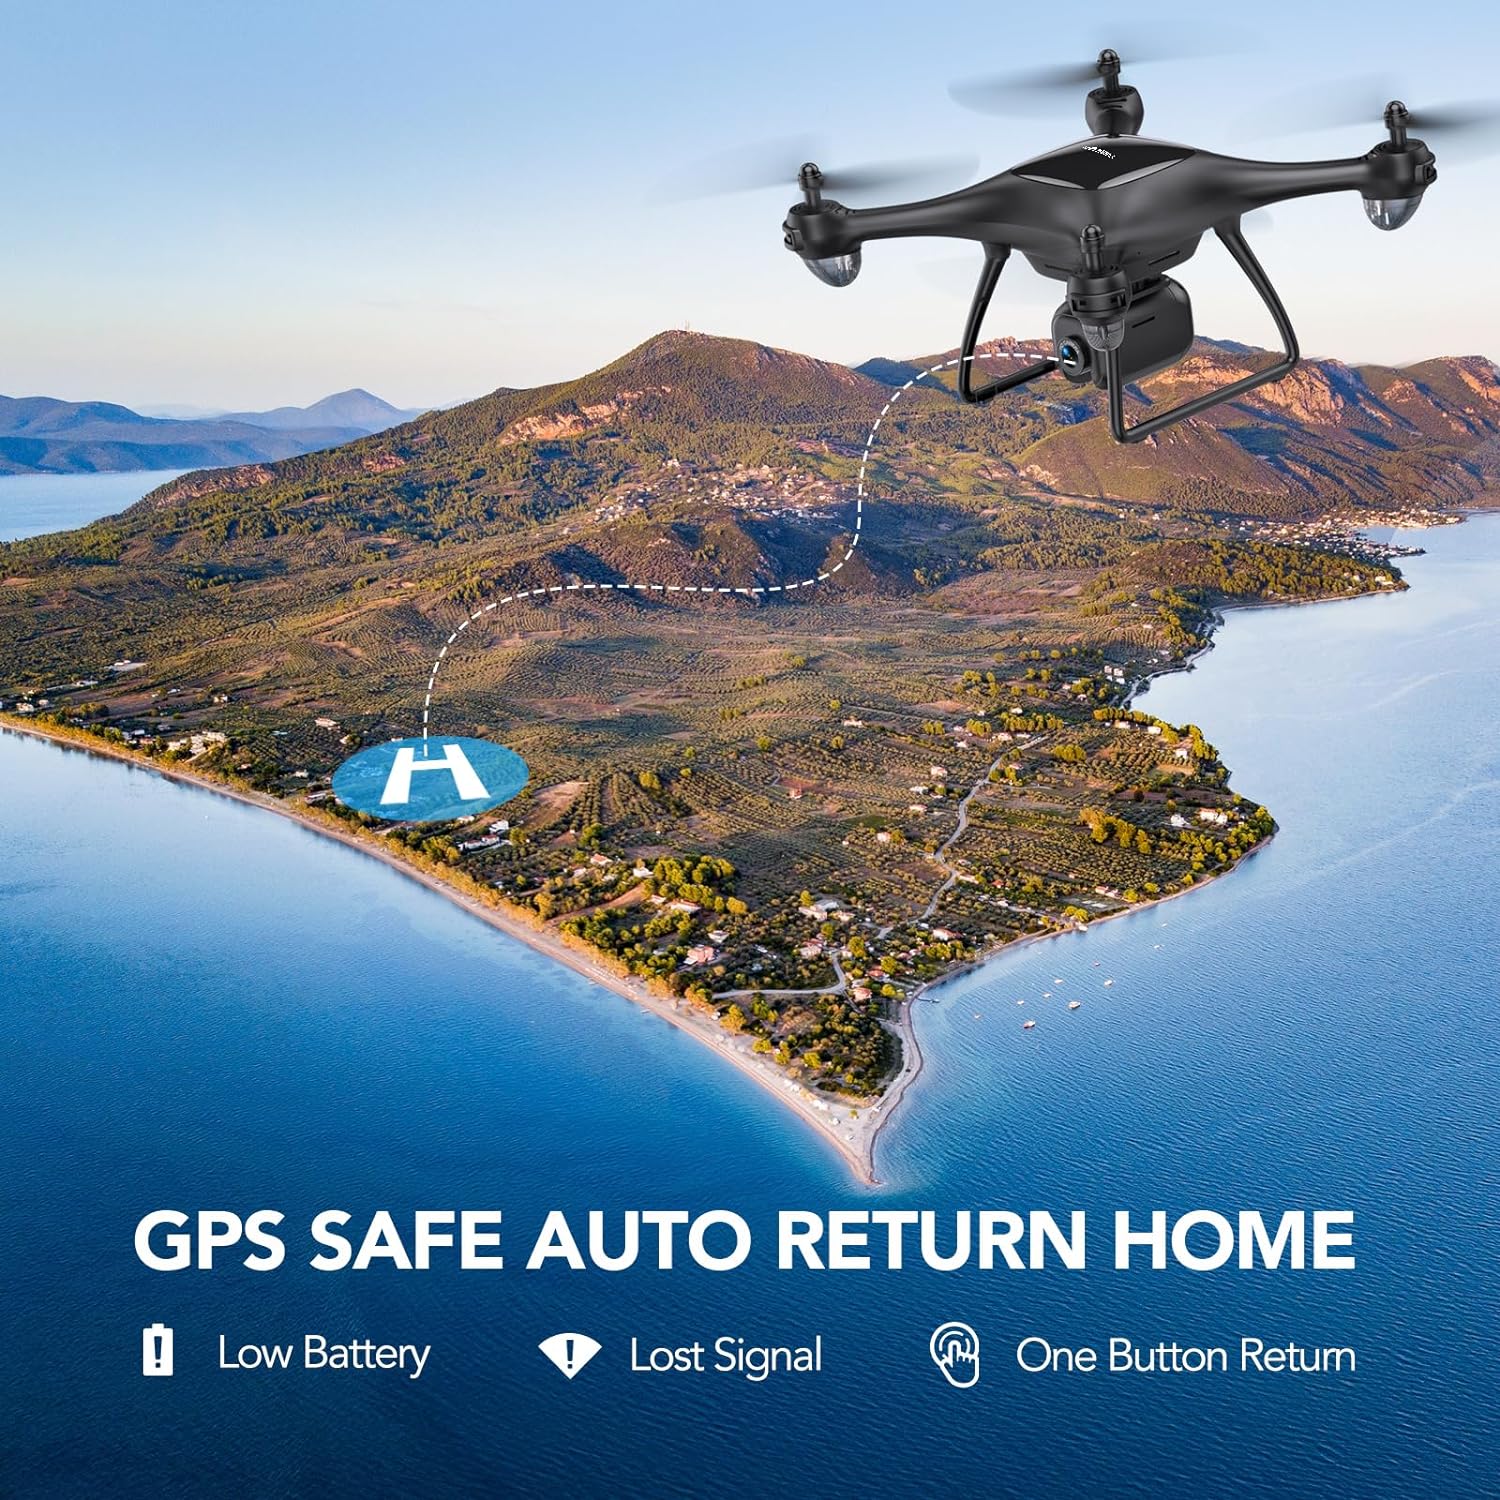 TOMZON P5G GPS Drone With Auto Return